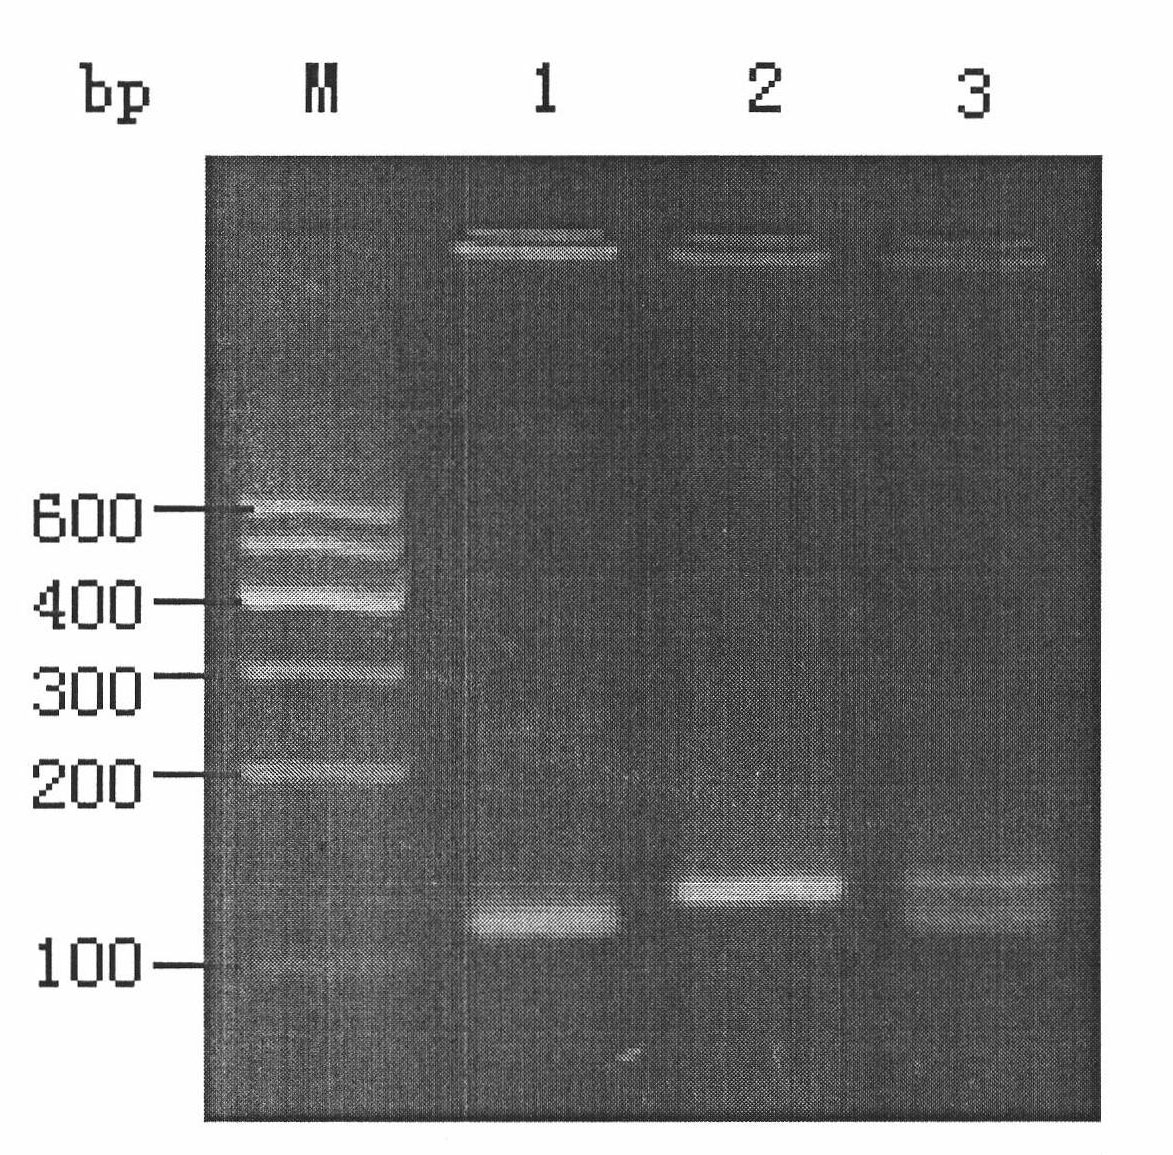 Method for identifying gene polymorphism rs2274976 of human MTHFR